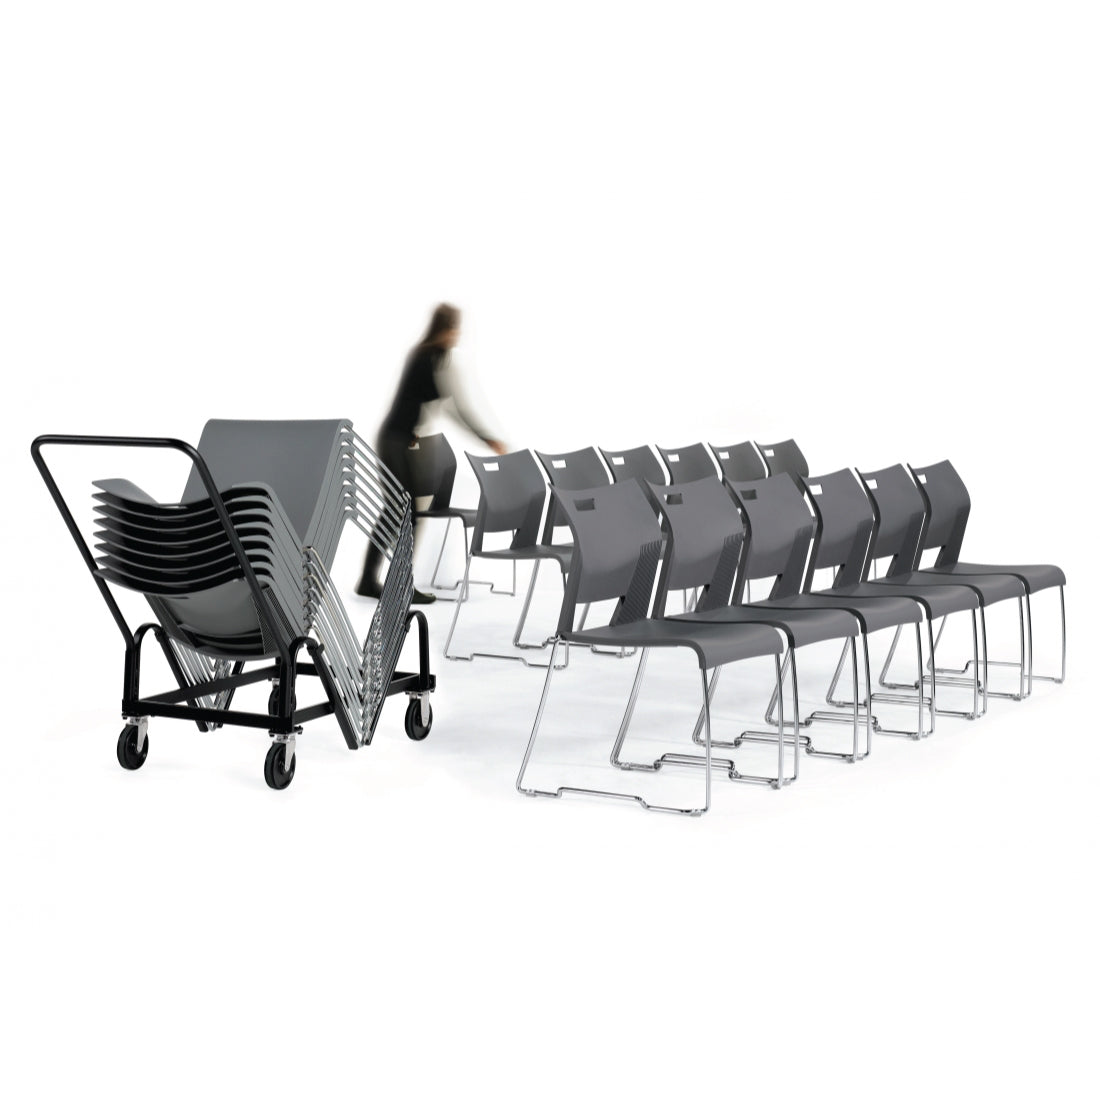 Duet Armless Stacking Chair - Kainosbuy.com